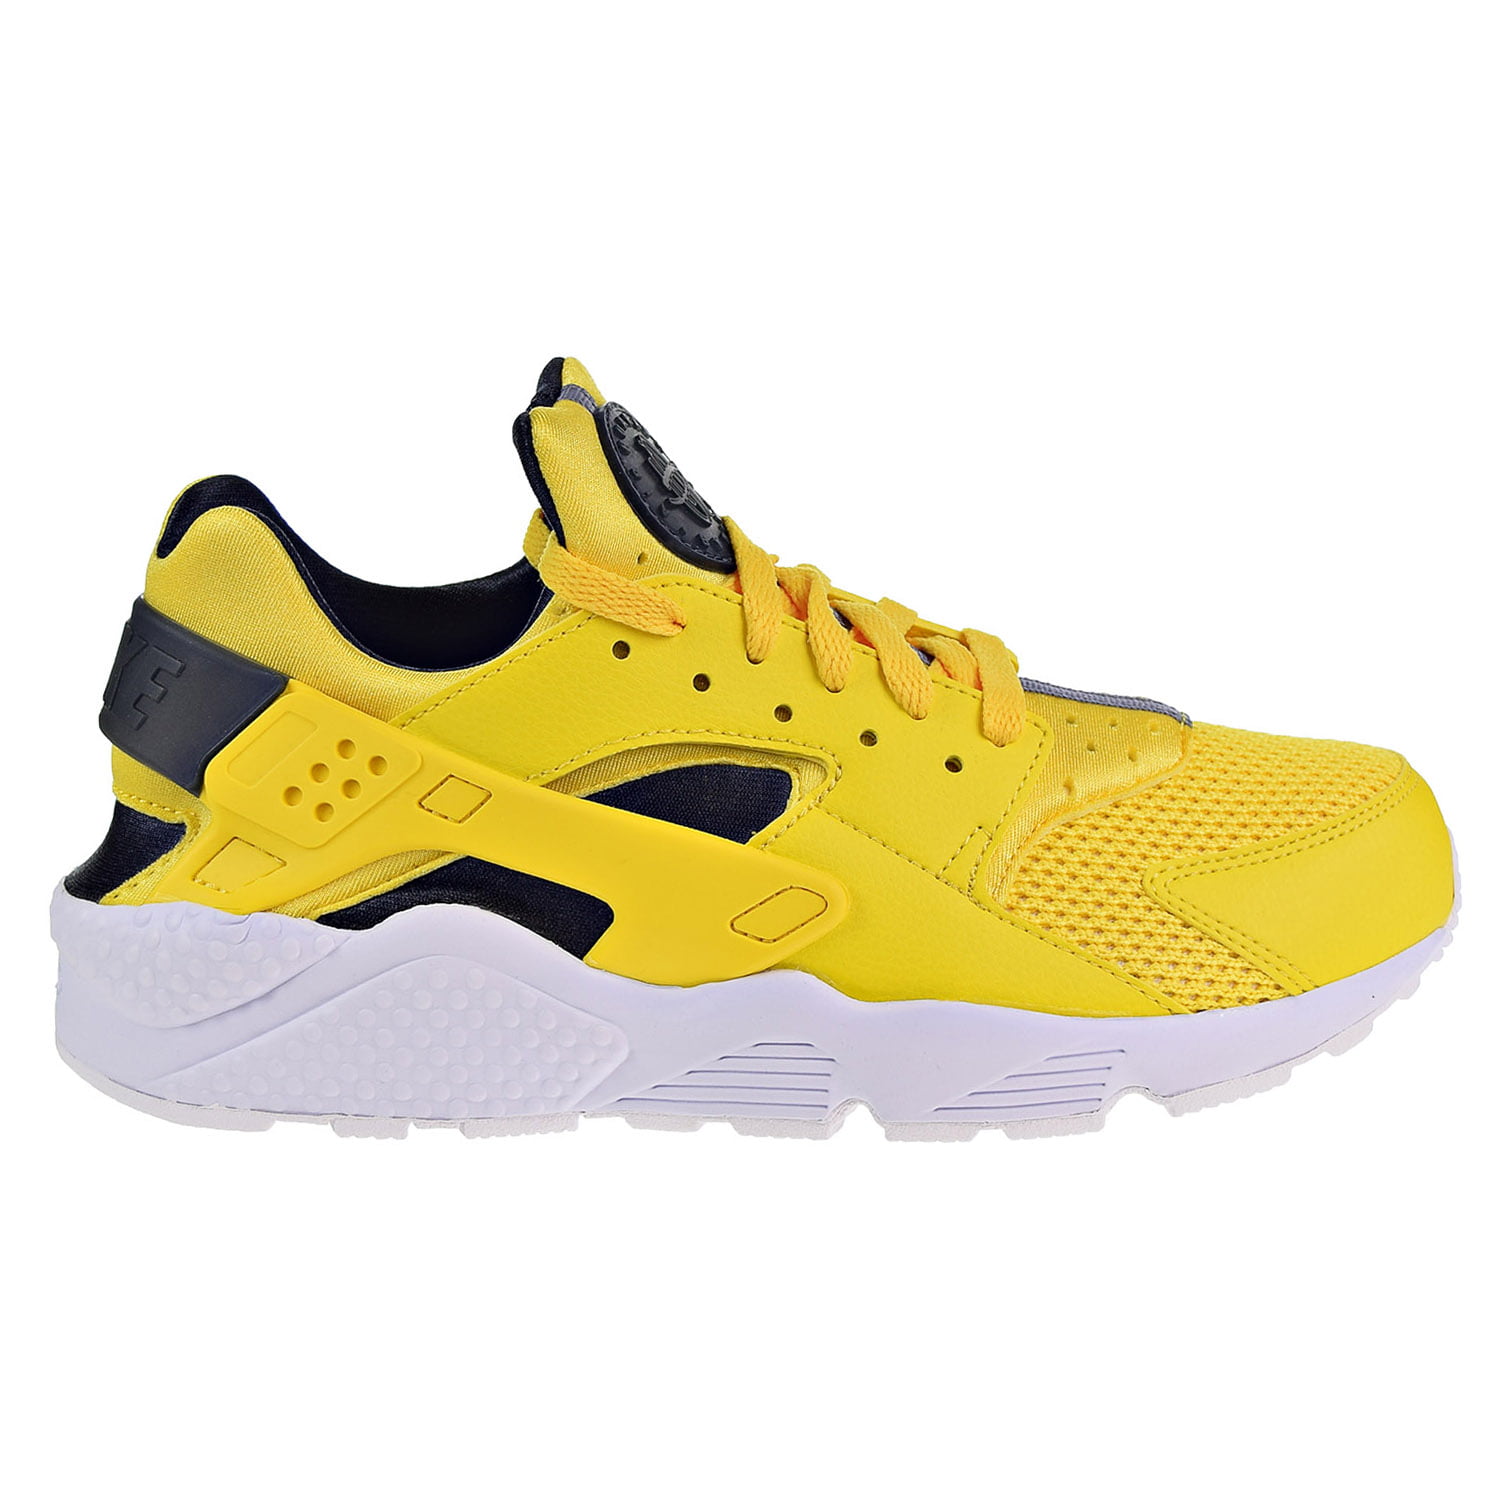 volwassen Crimineel krassen Nike Air Huarache Men's Running Shoes Tour Yellow/Anthracite-White  318429-700 - Walmart.com